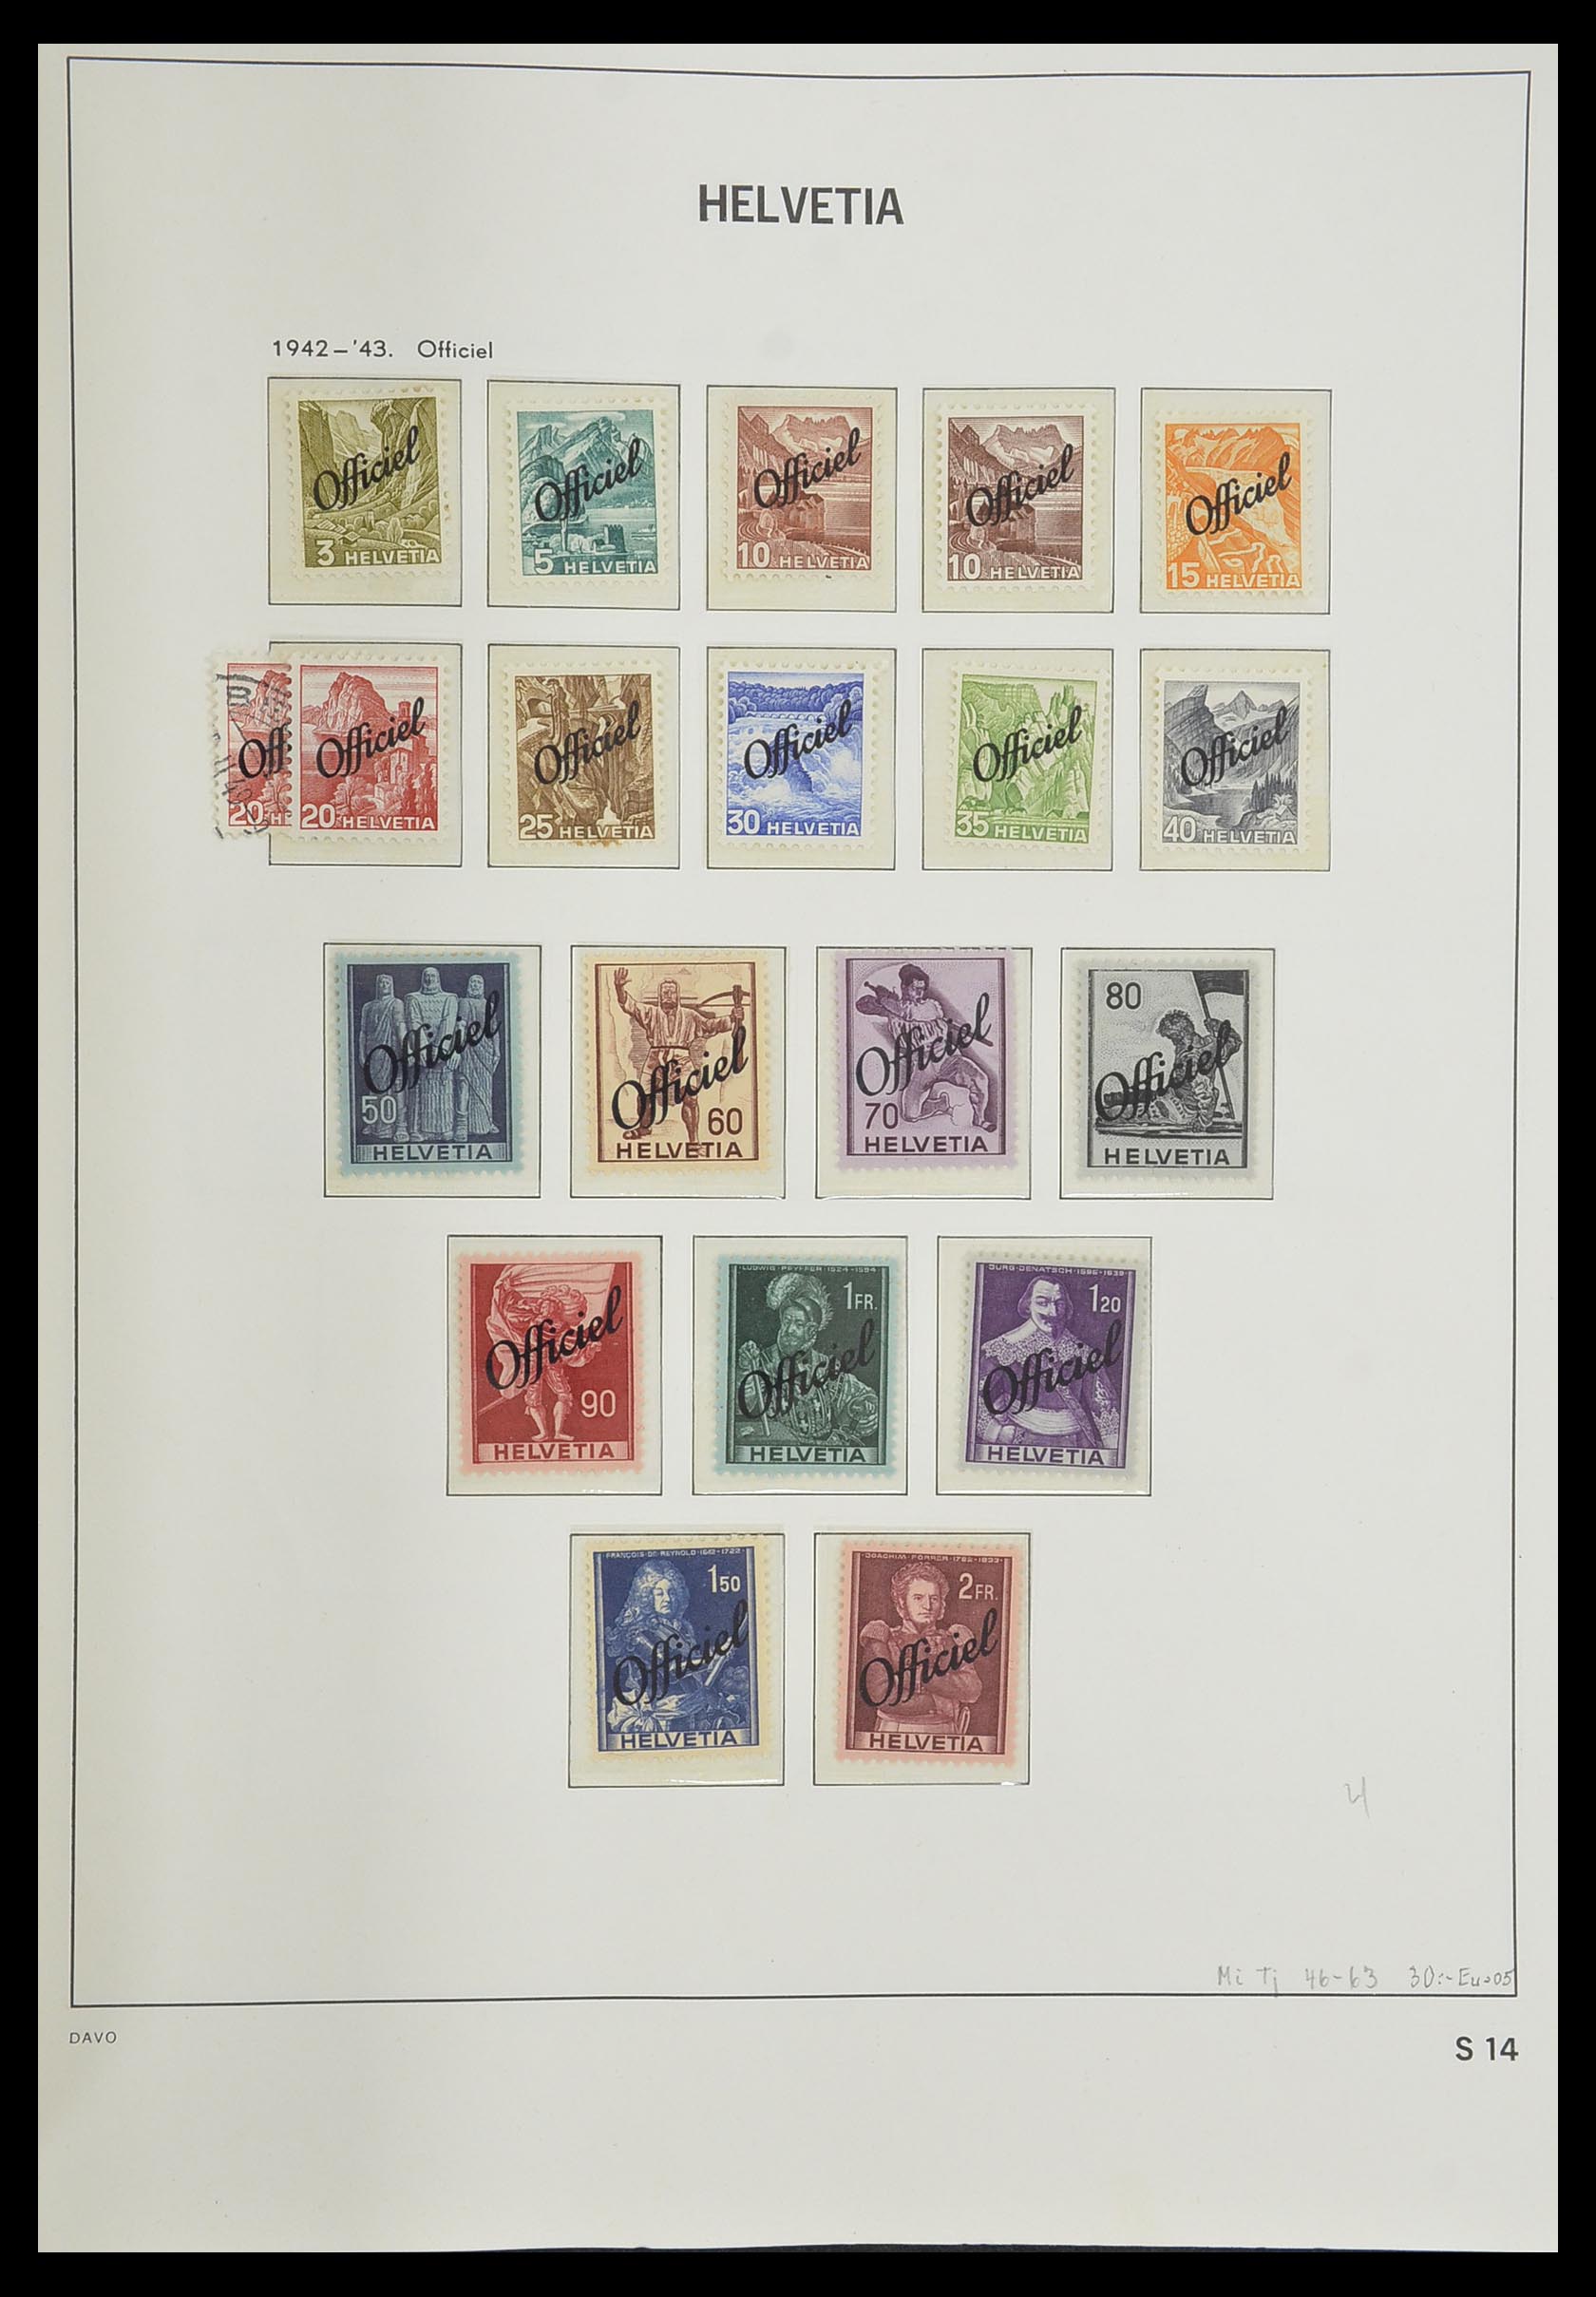 33559 163 - Stamp collection 33559 Switzerland 1850-2000.